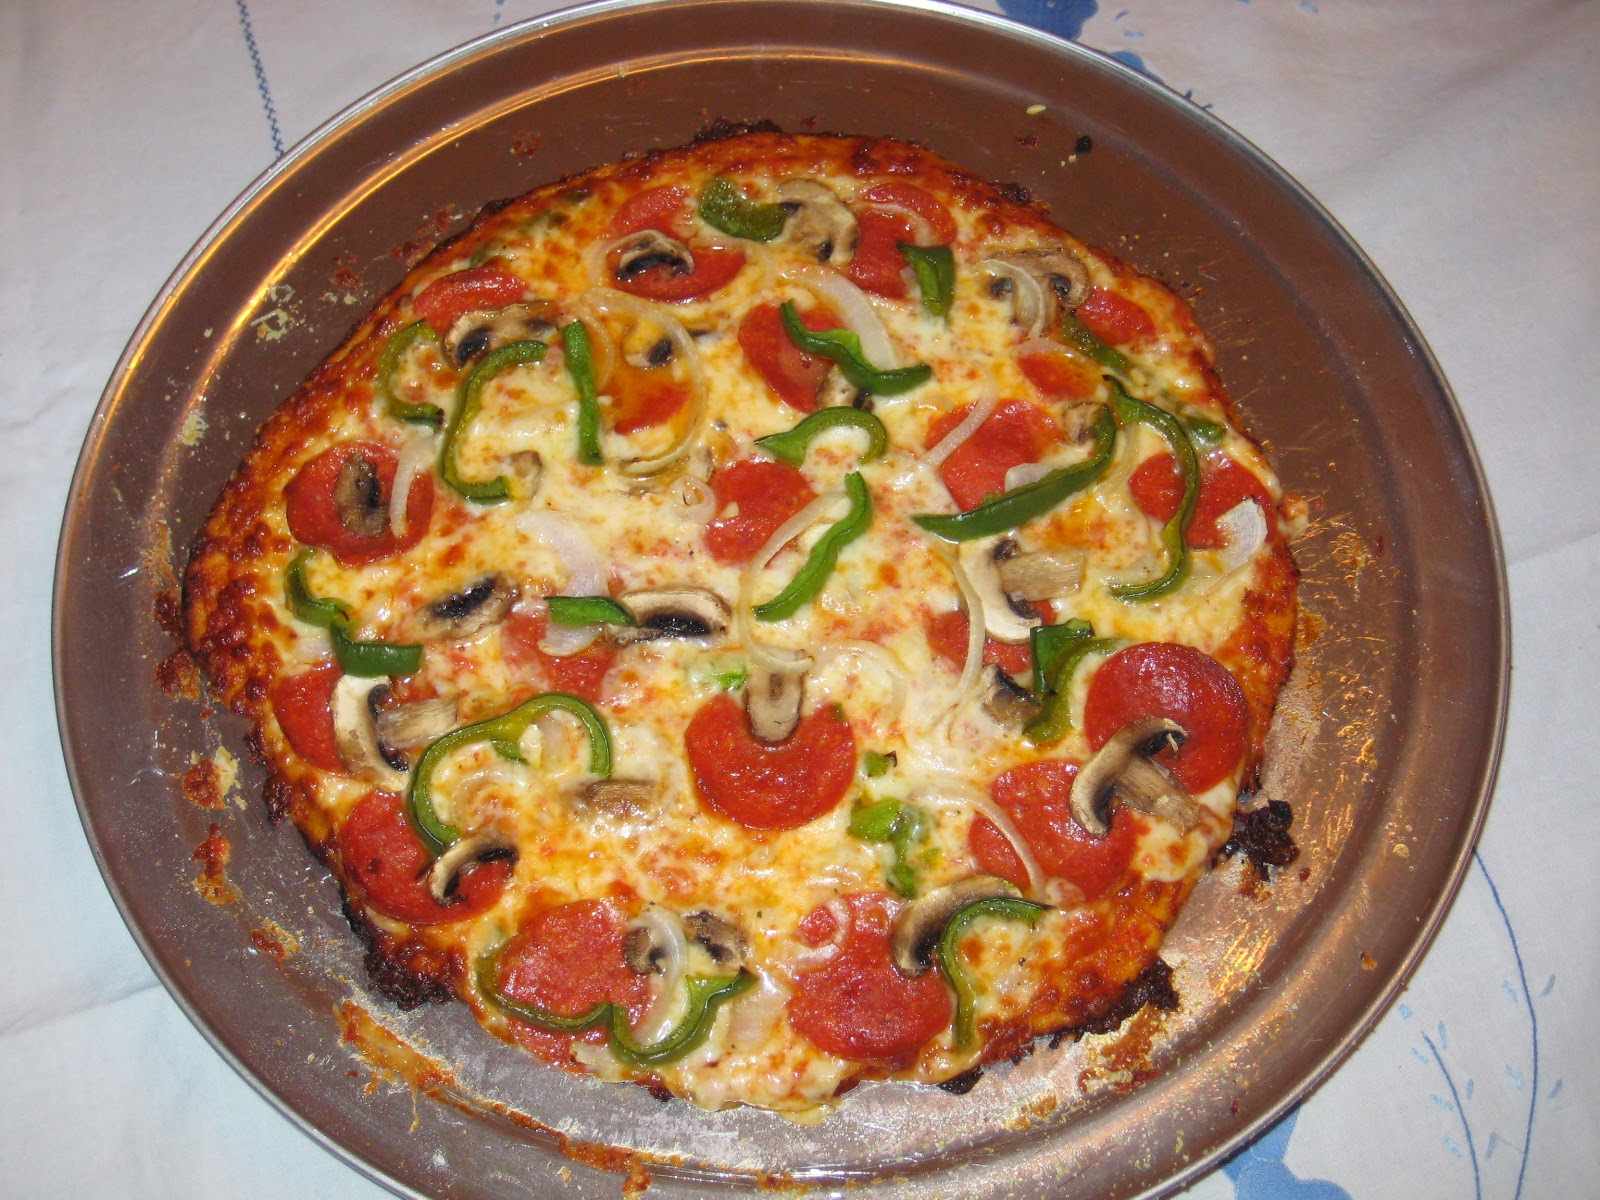 http://3.bp.blogspot.com/-e-KYViVOx2A/VKBYgWvncaI/AAAAAAAAA0I/4CQCQBIH7wU/s1600/atk-new-york-thin-crust-pizza.JPG